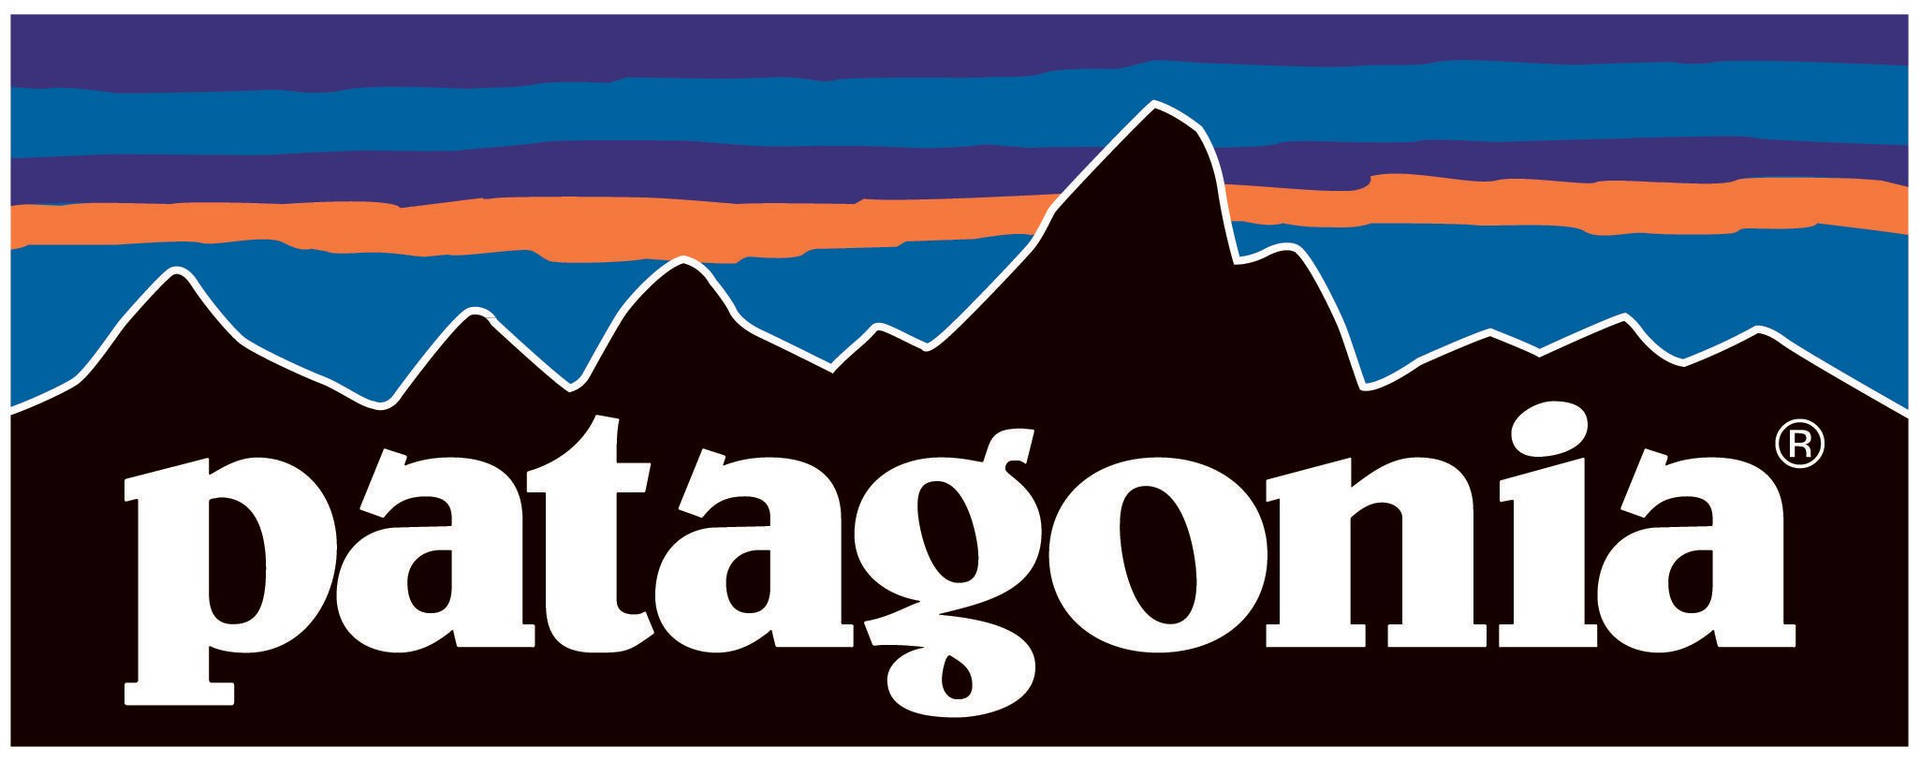 Patagonia Stylized Mountain Logo Background